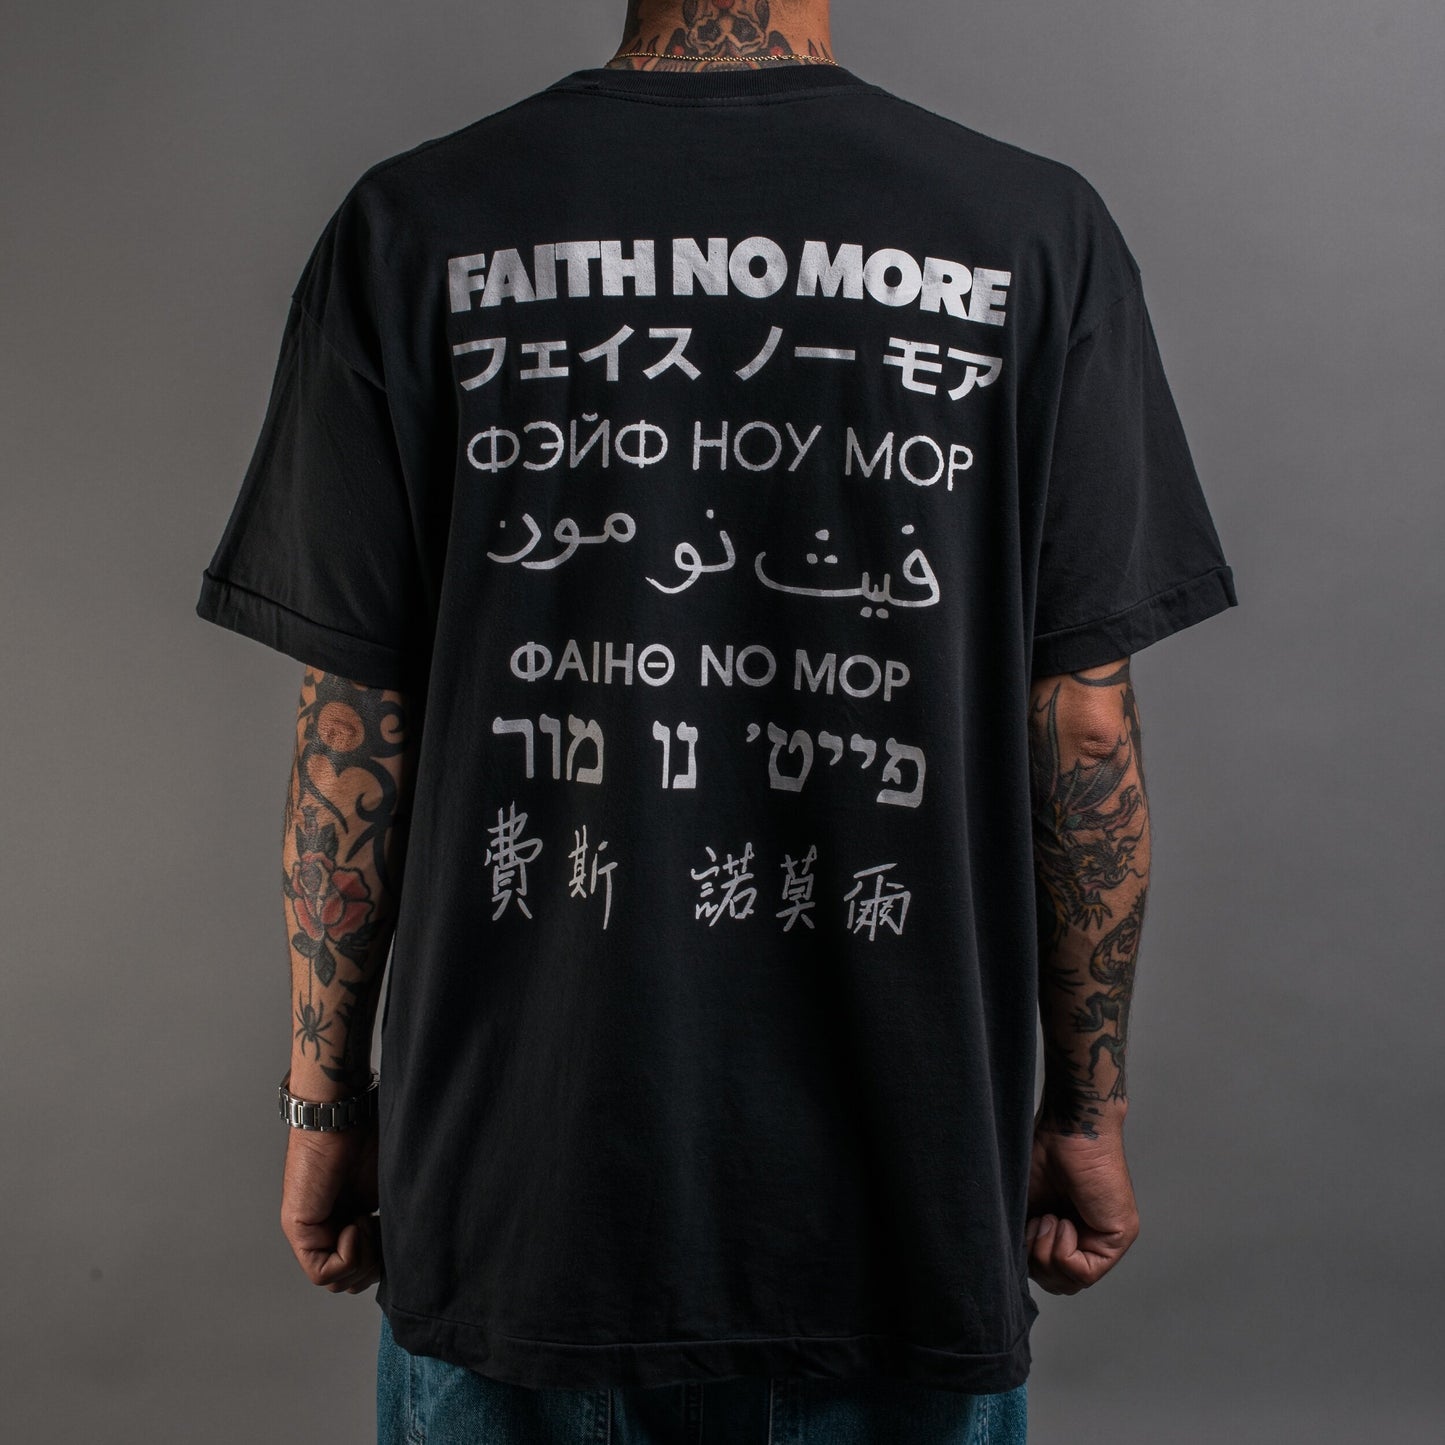 Vintage 1992 Faith No More T-Shirt